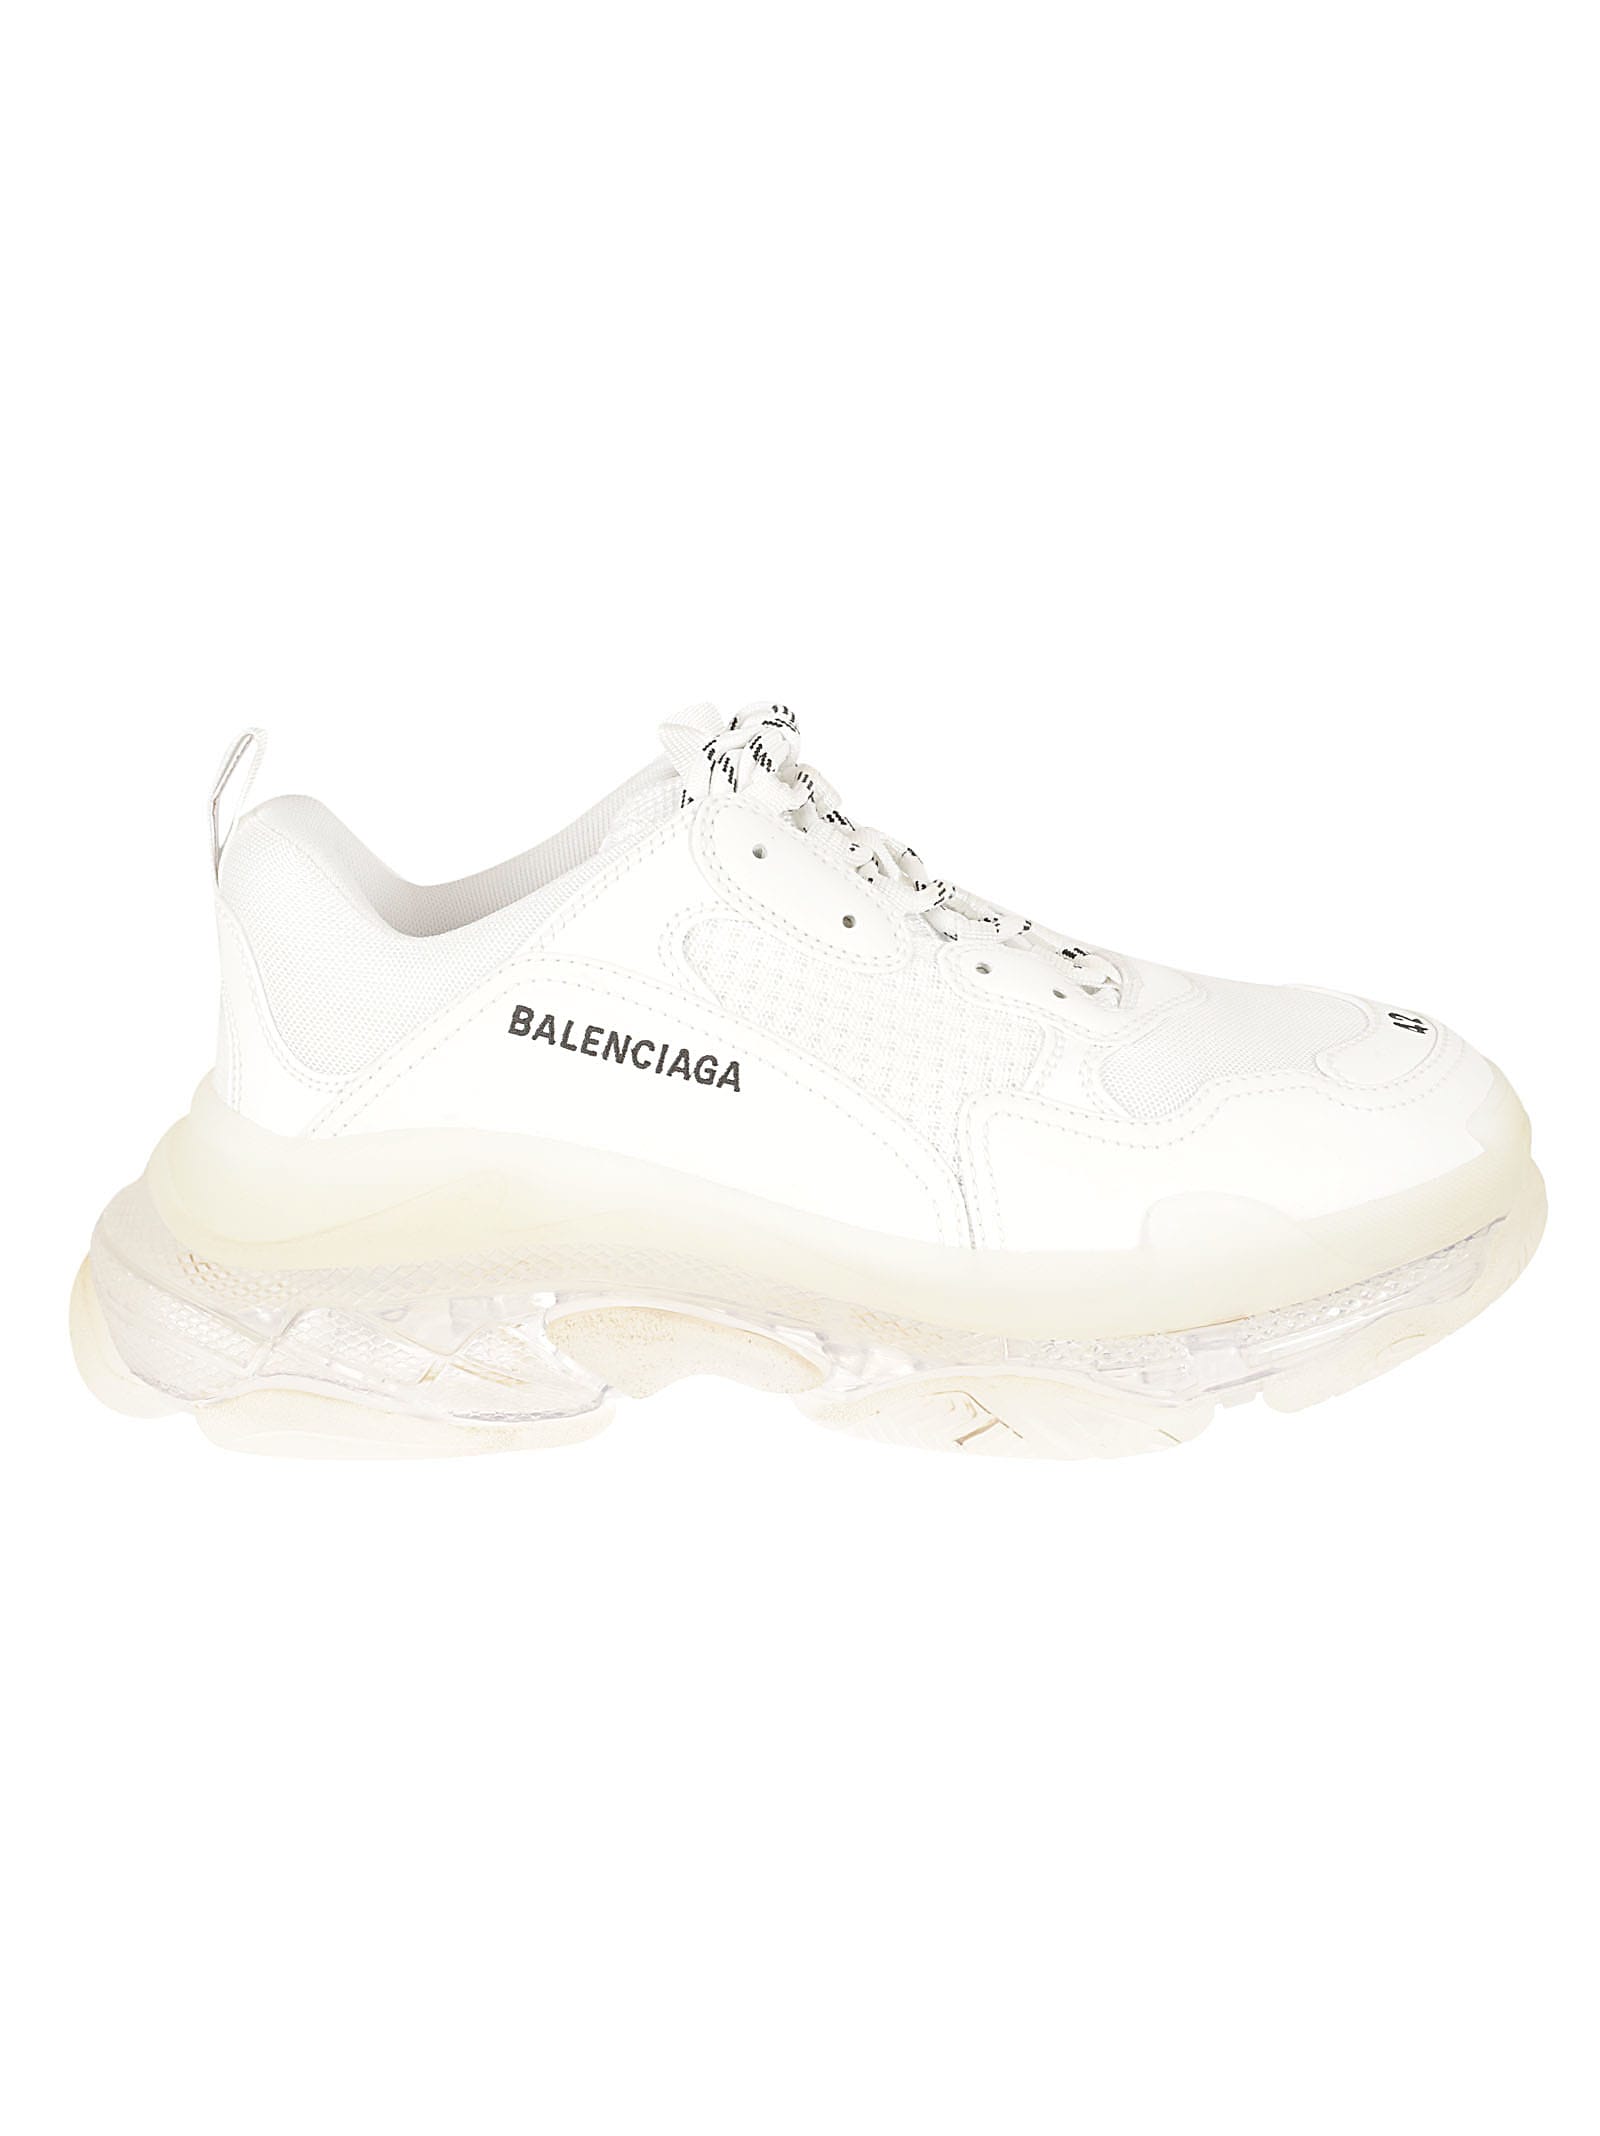 Balenciaga Triple S Clearsole Sneakers